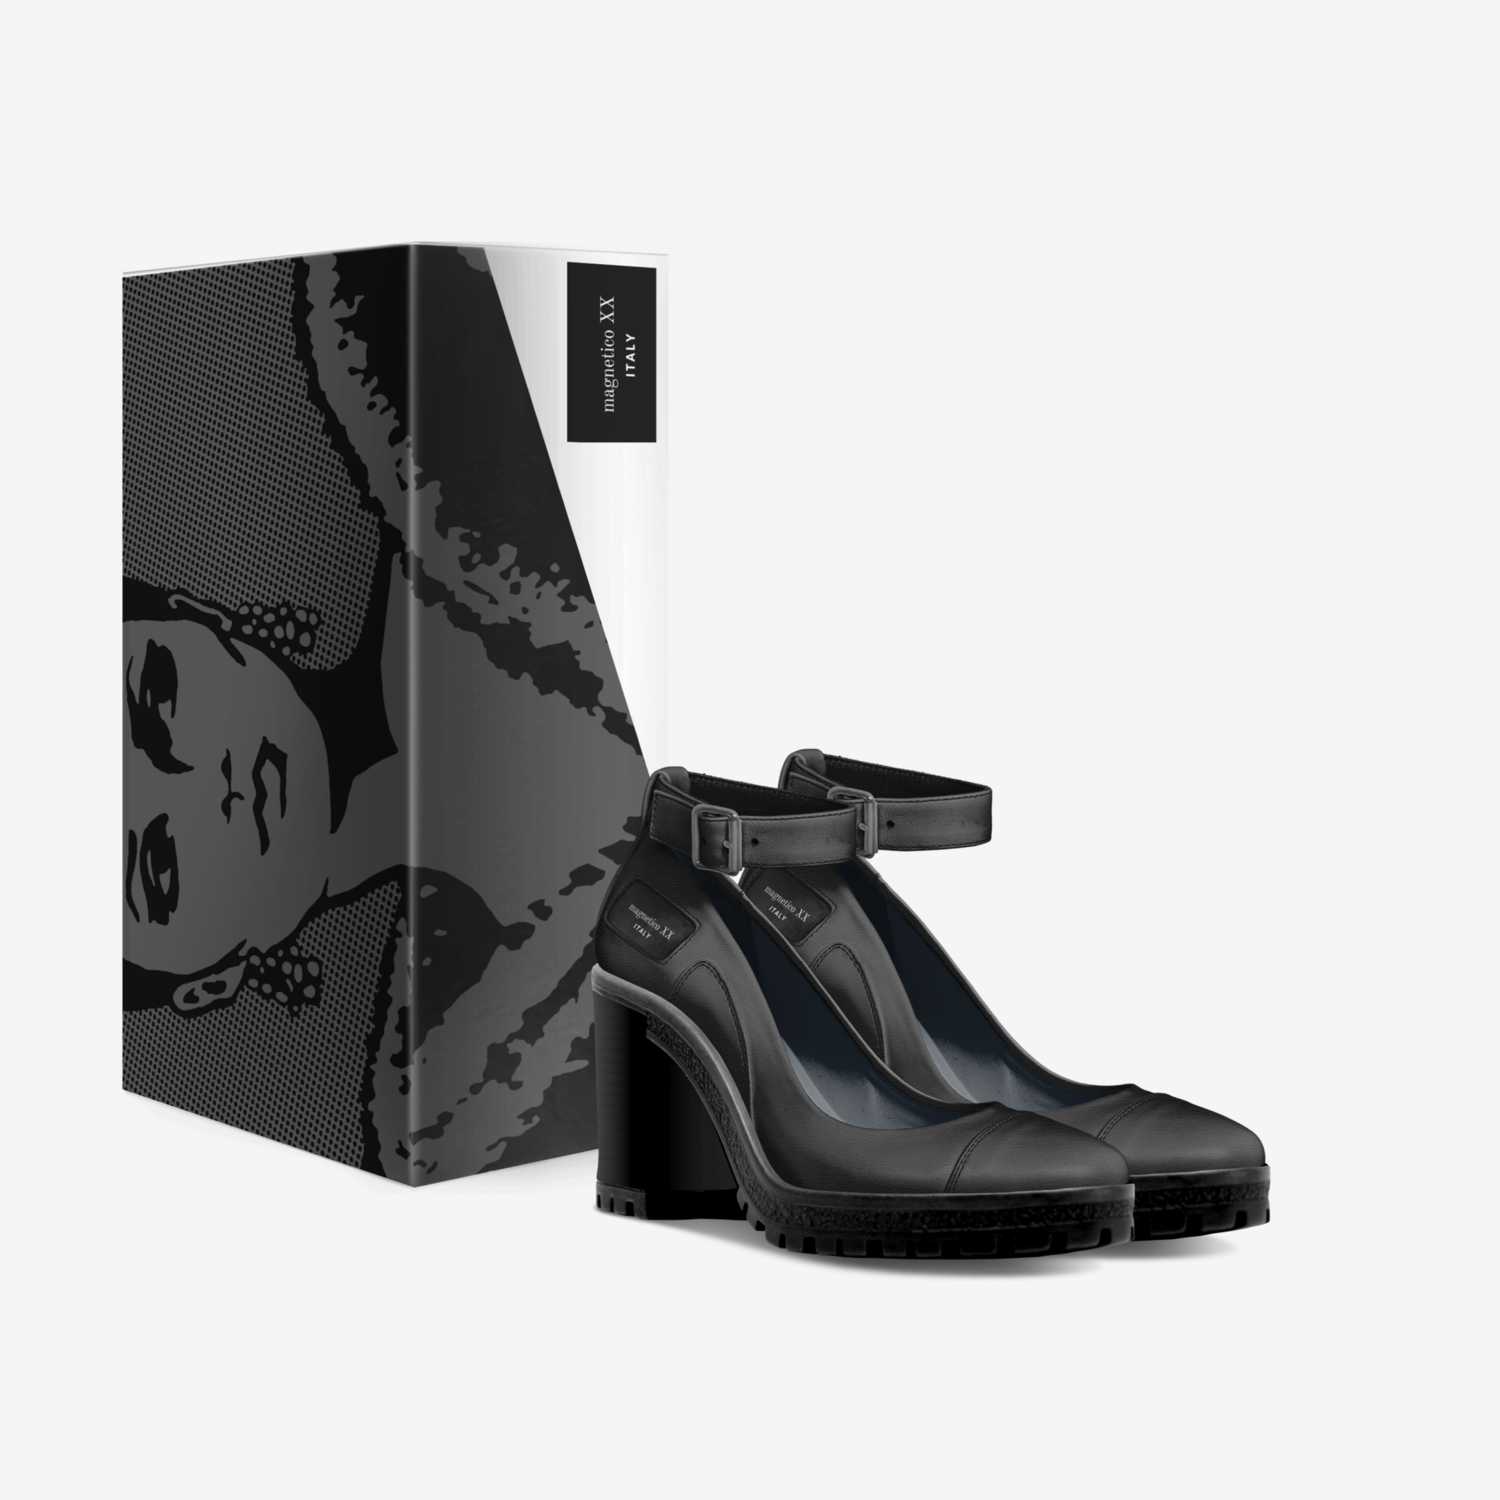 magnetico XX EBONY custom made in Italy shoes by Jesús Sandoval | Box view